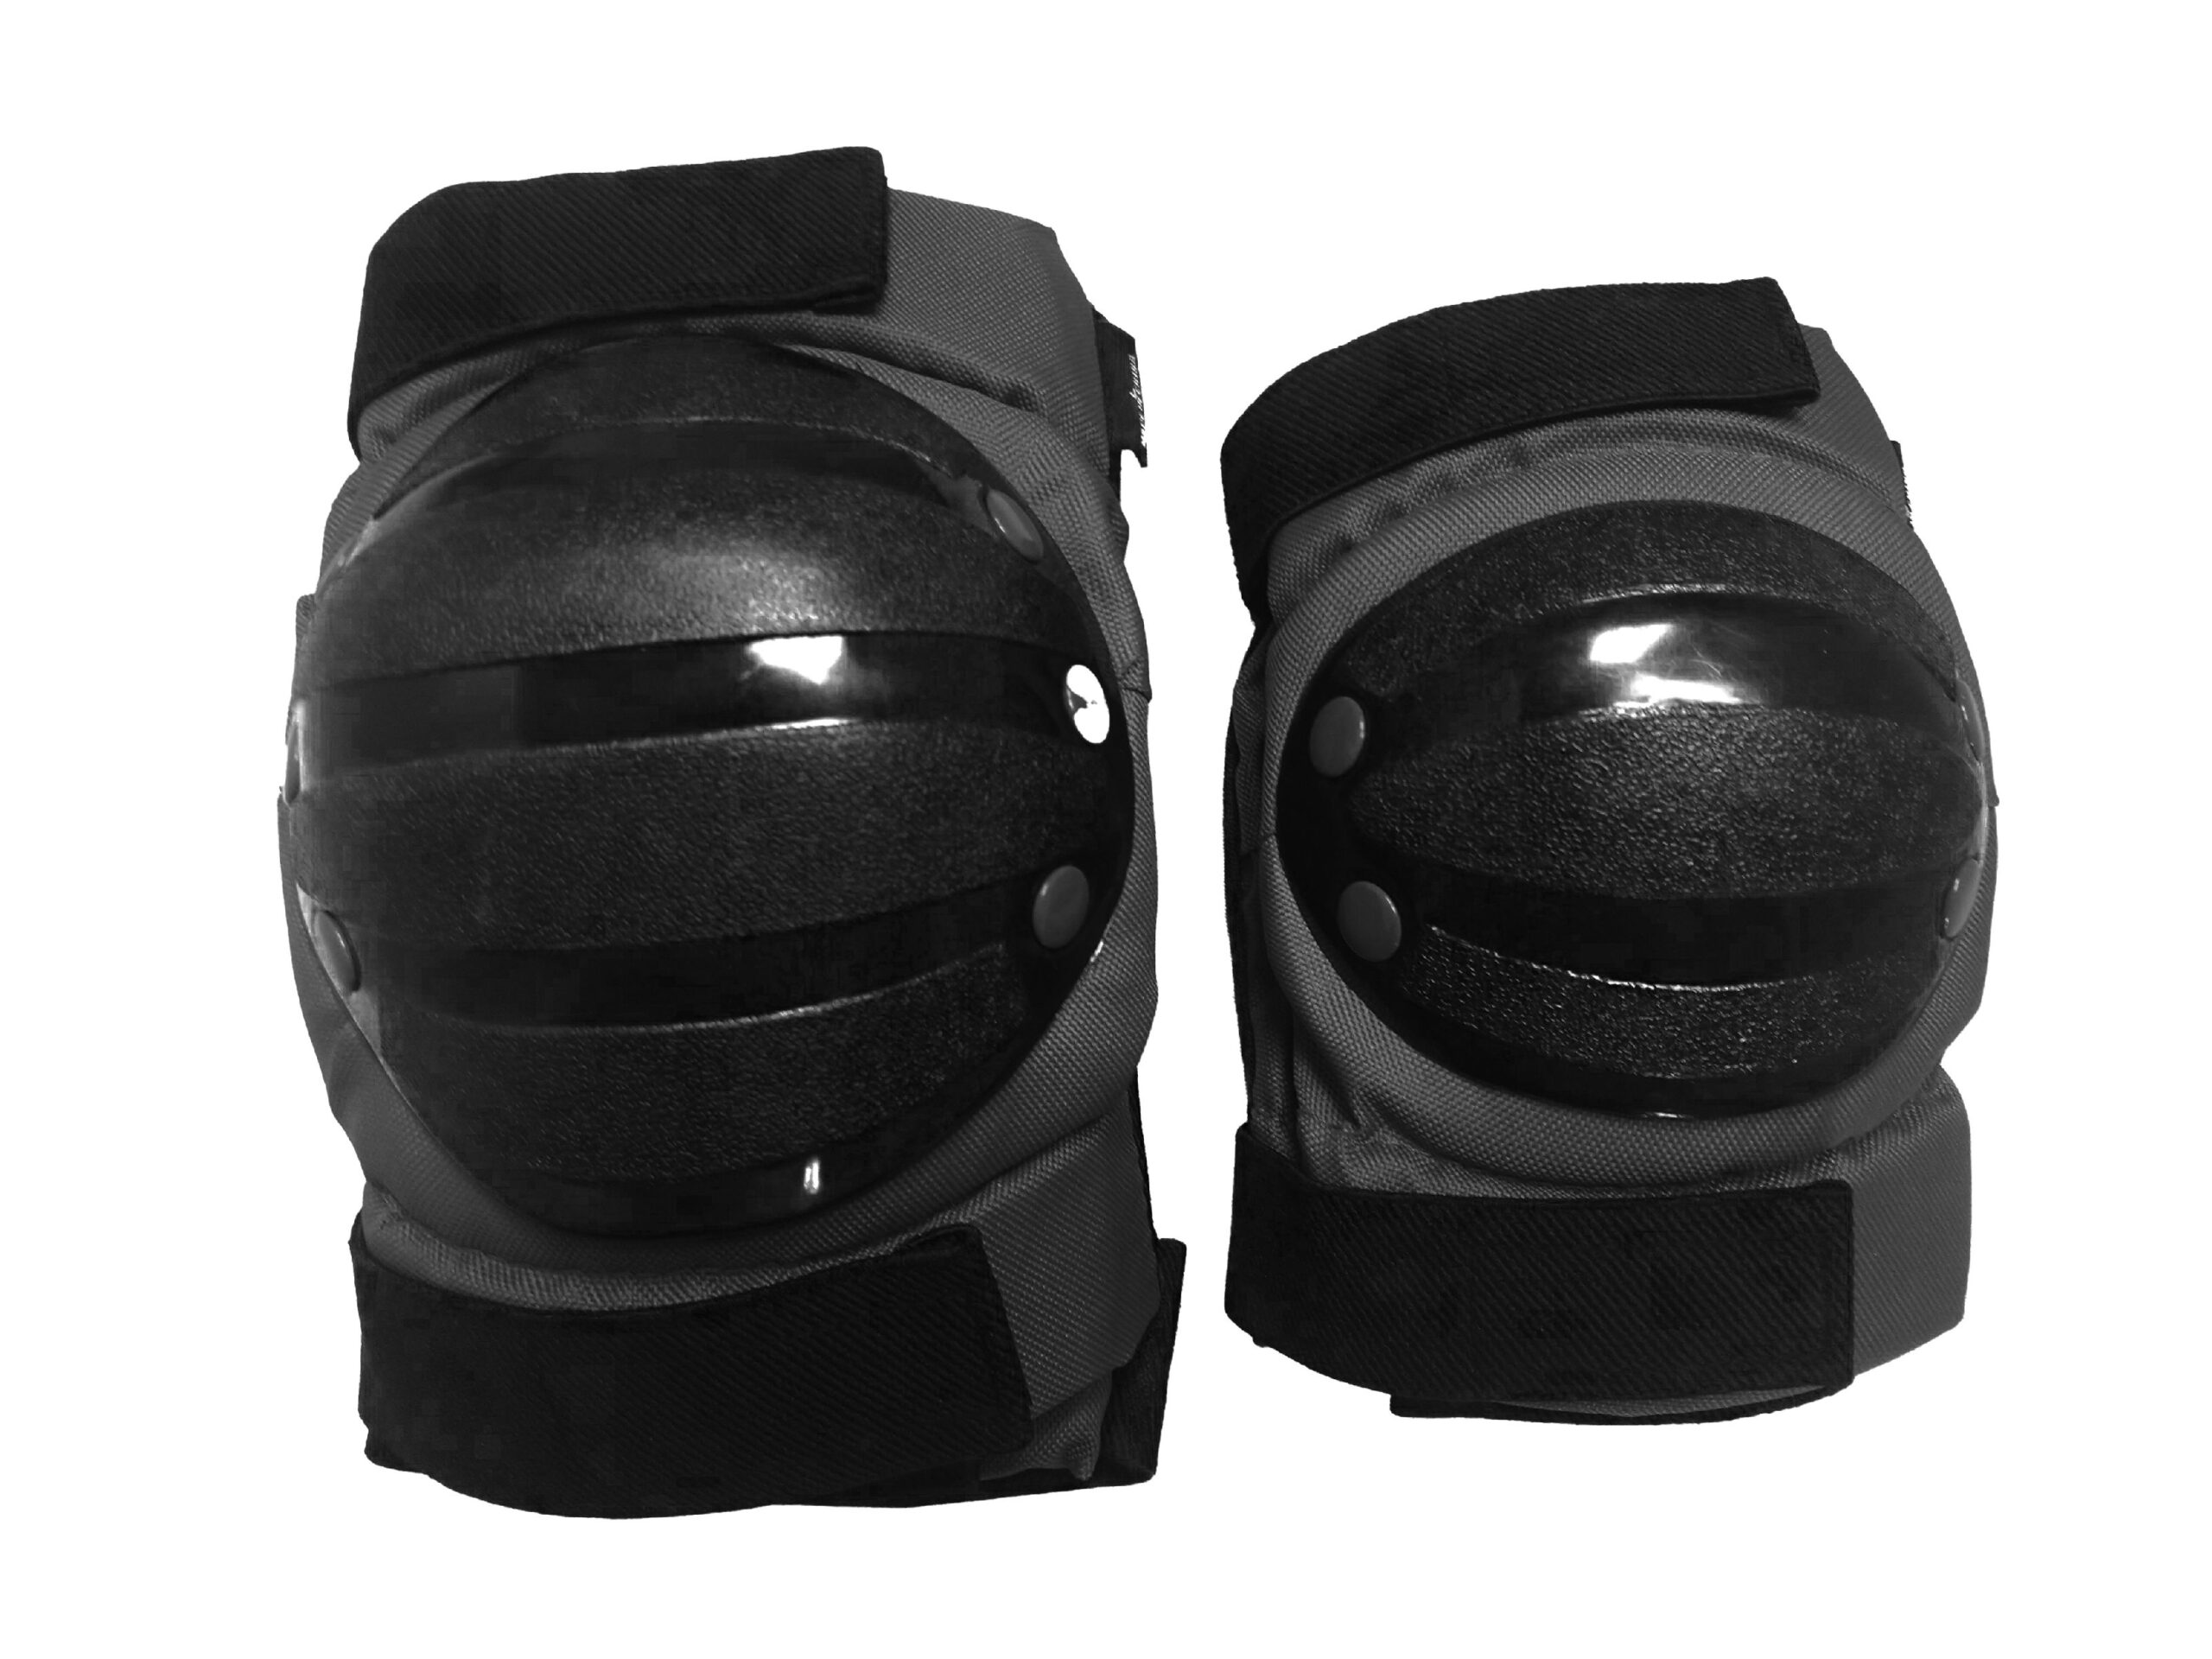 GTPADSZ Greytek Small Black Elbow & Knee Pad Set